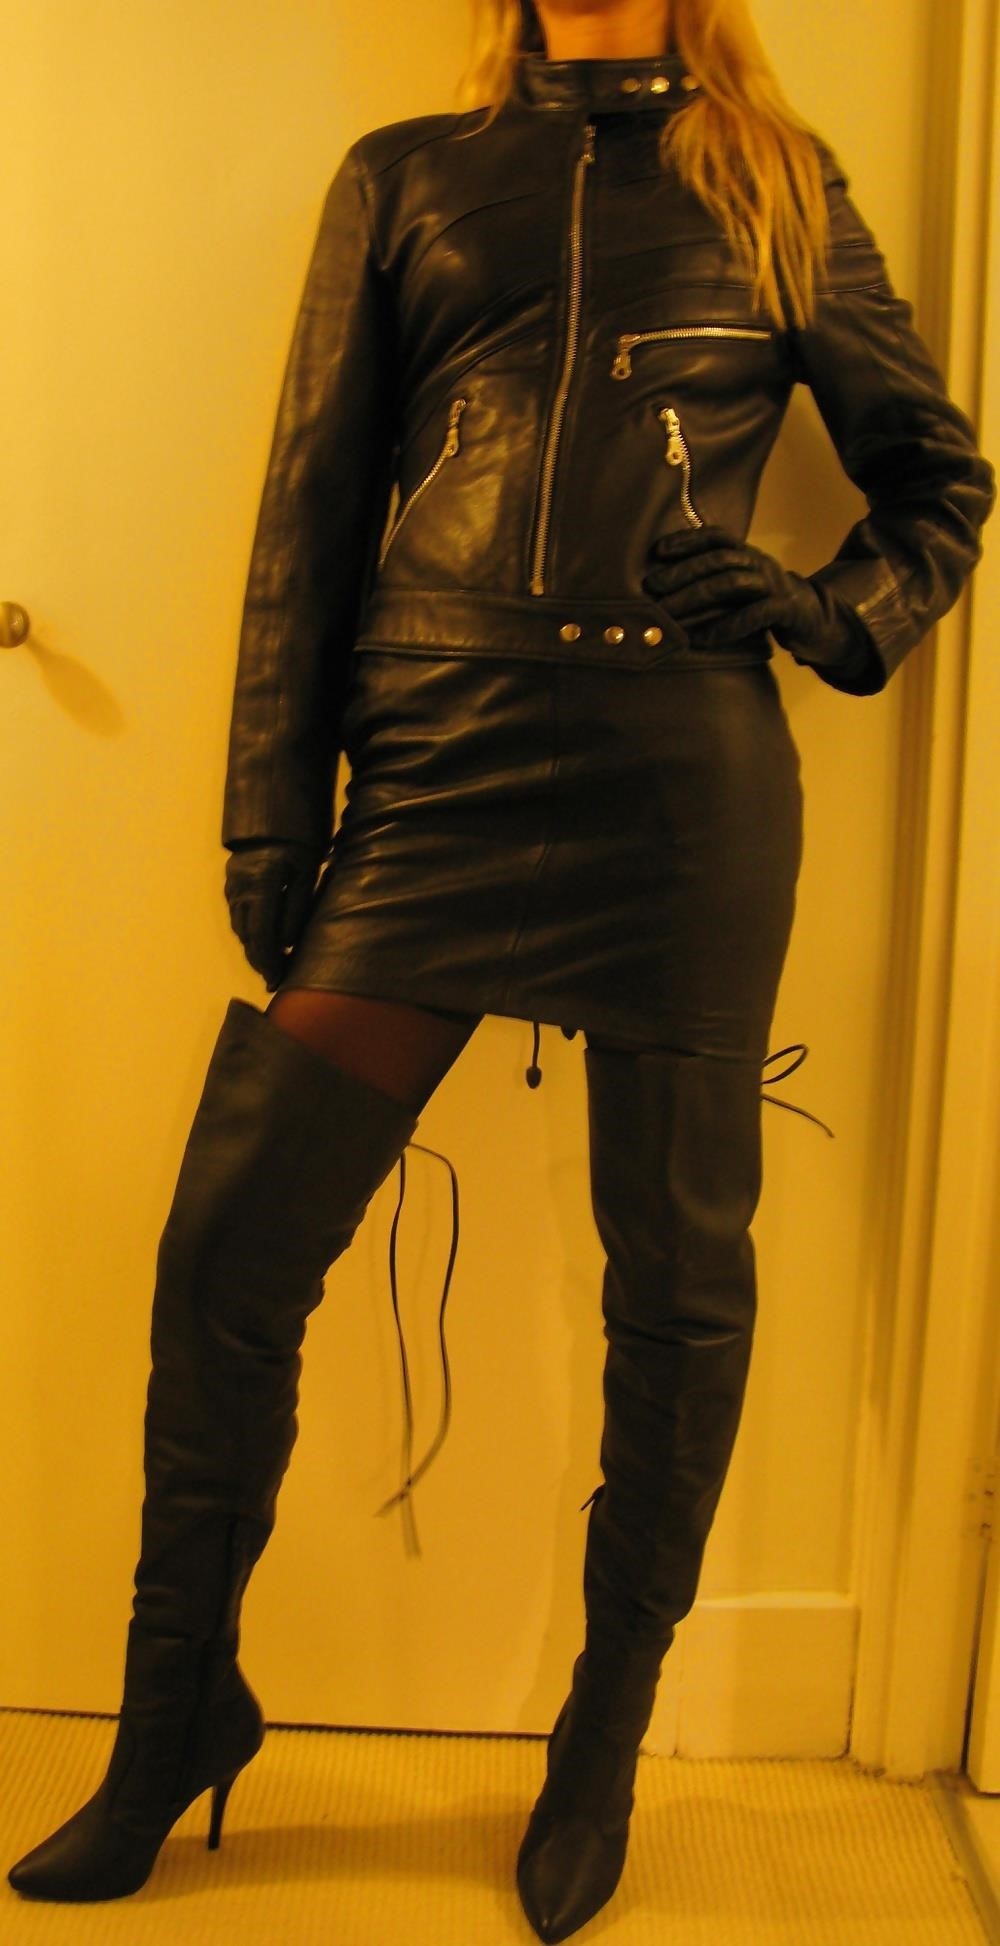 Leather girl bdsm-2500